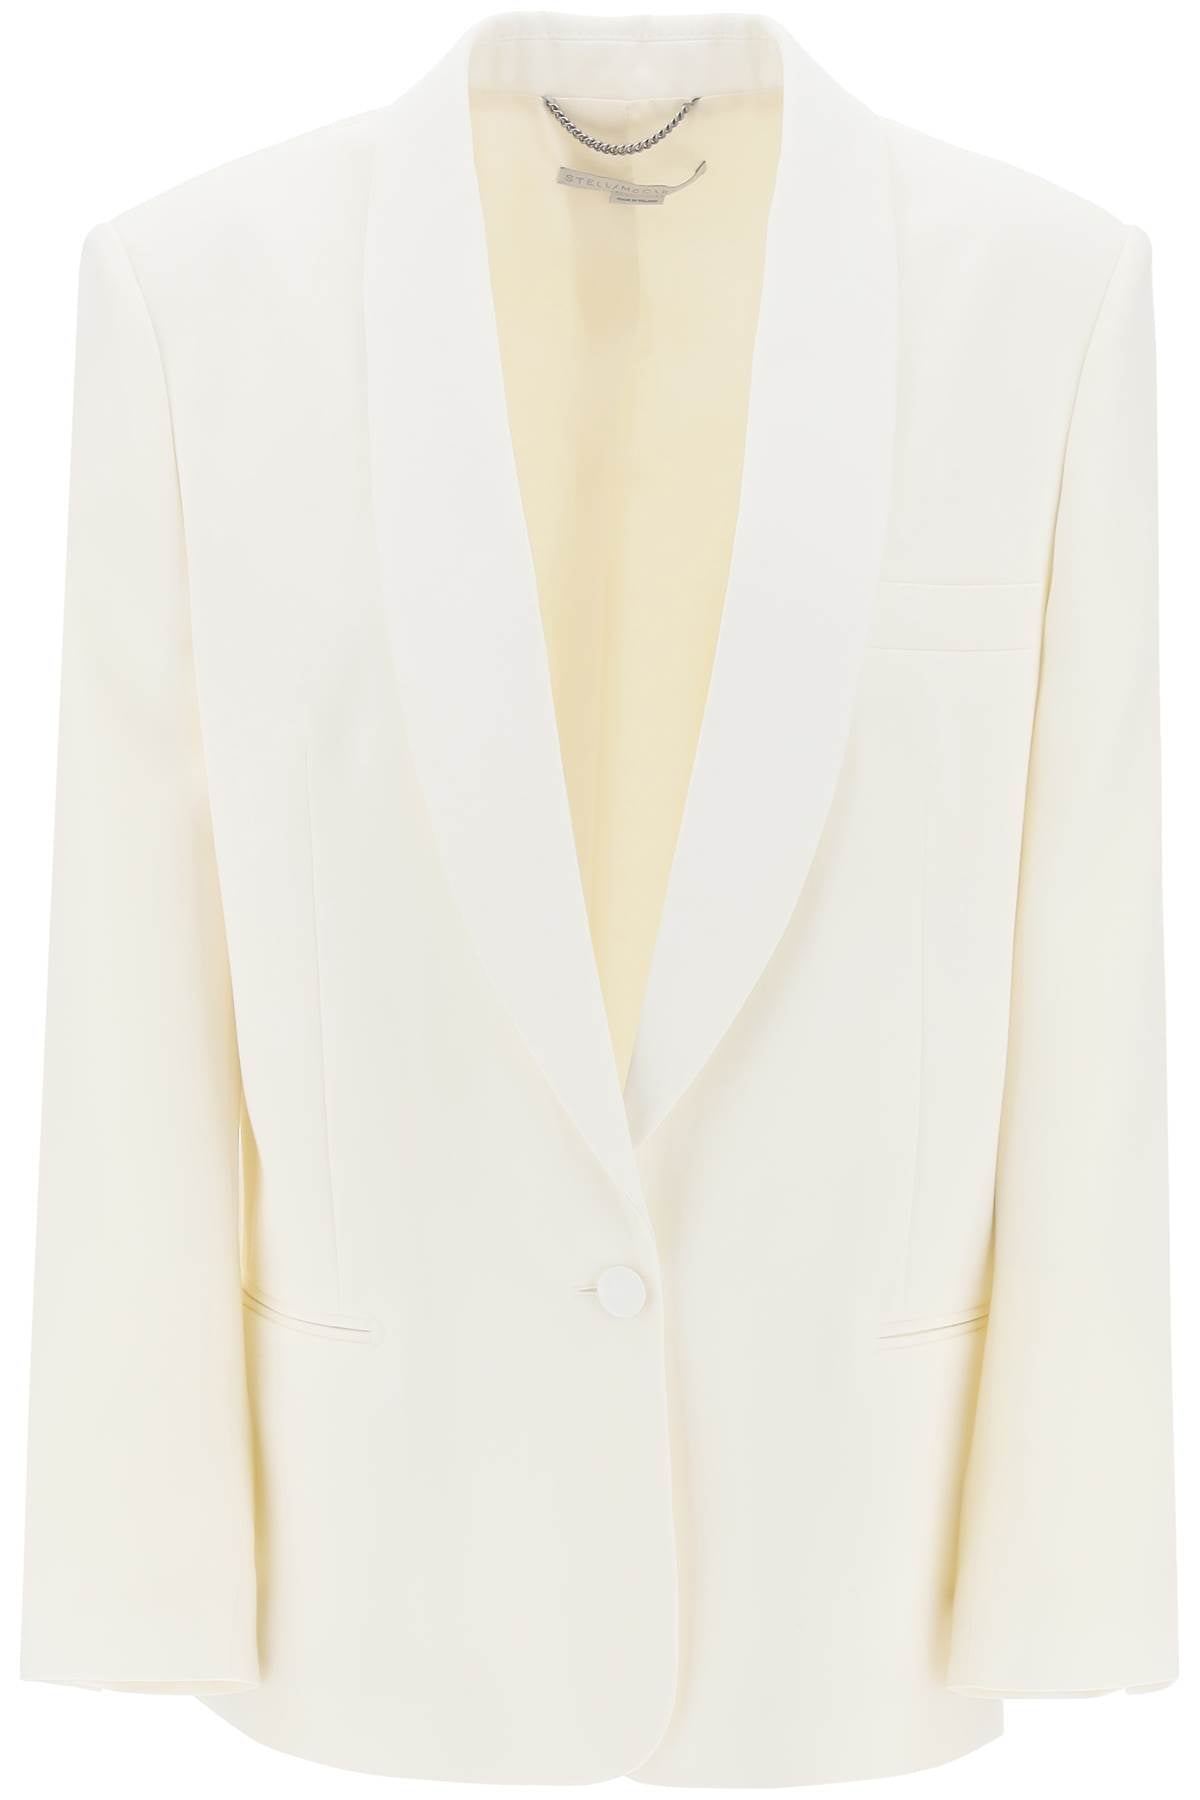 Stella mccartney single-breasted tailored blazer with sh-0